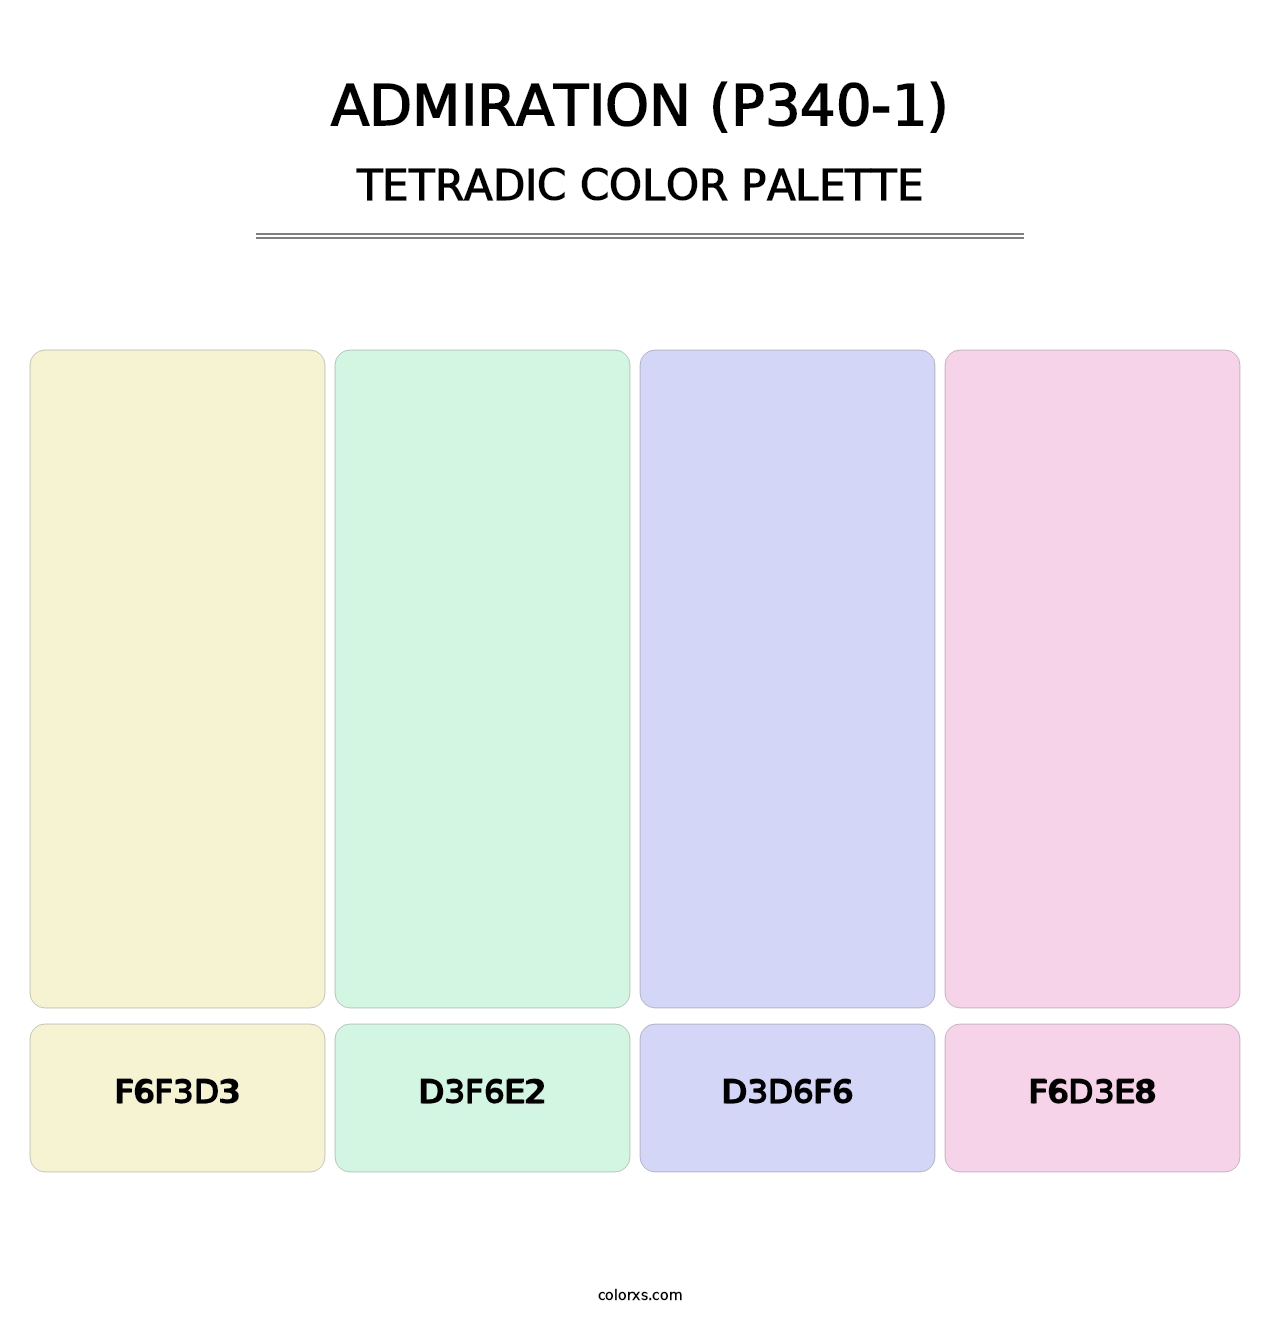 Admiration (P340-1) - Tetradic Color Palette